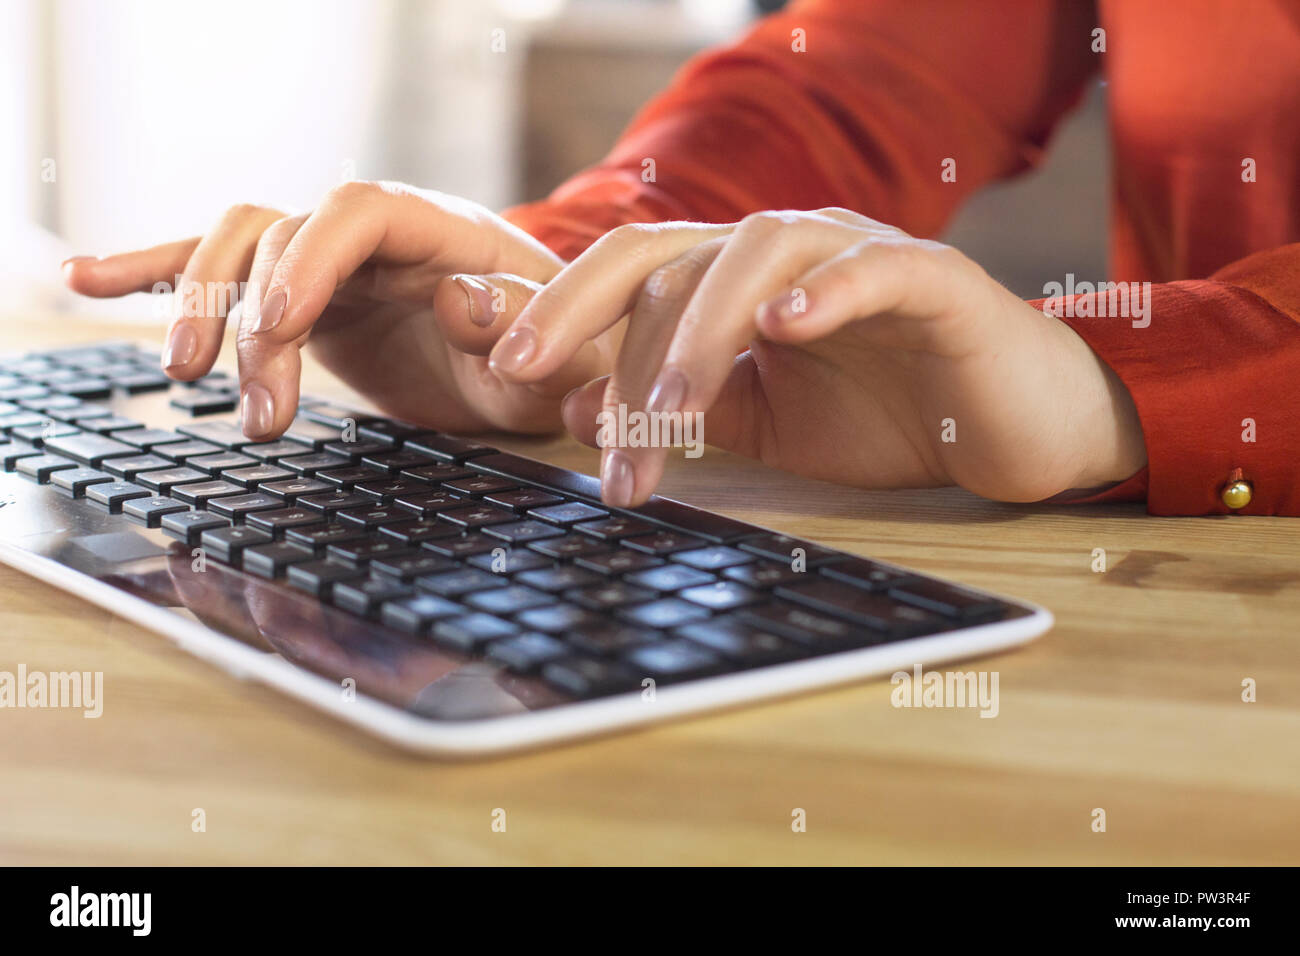 Woman typing on keyboard. Stock Photo